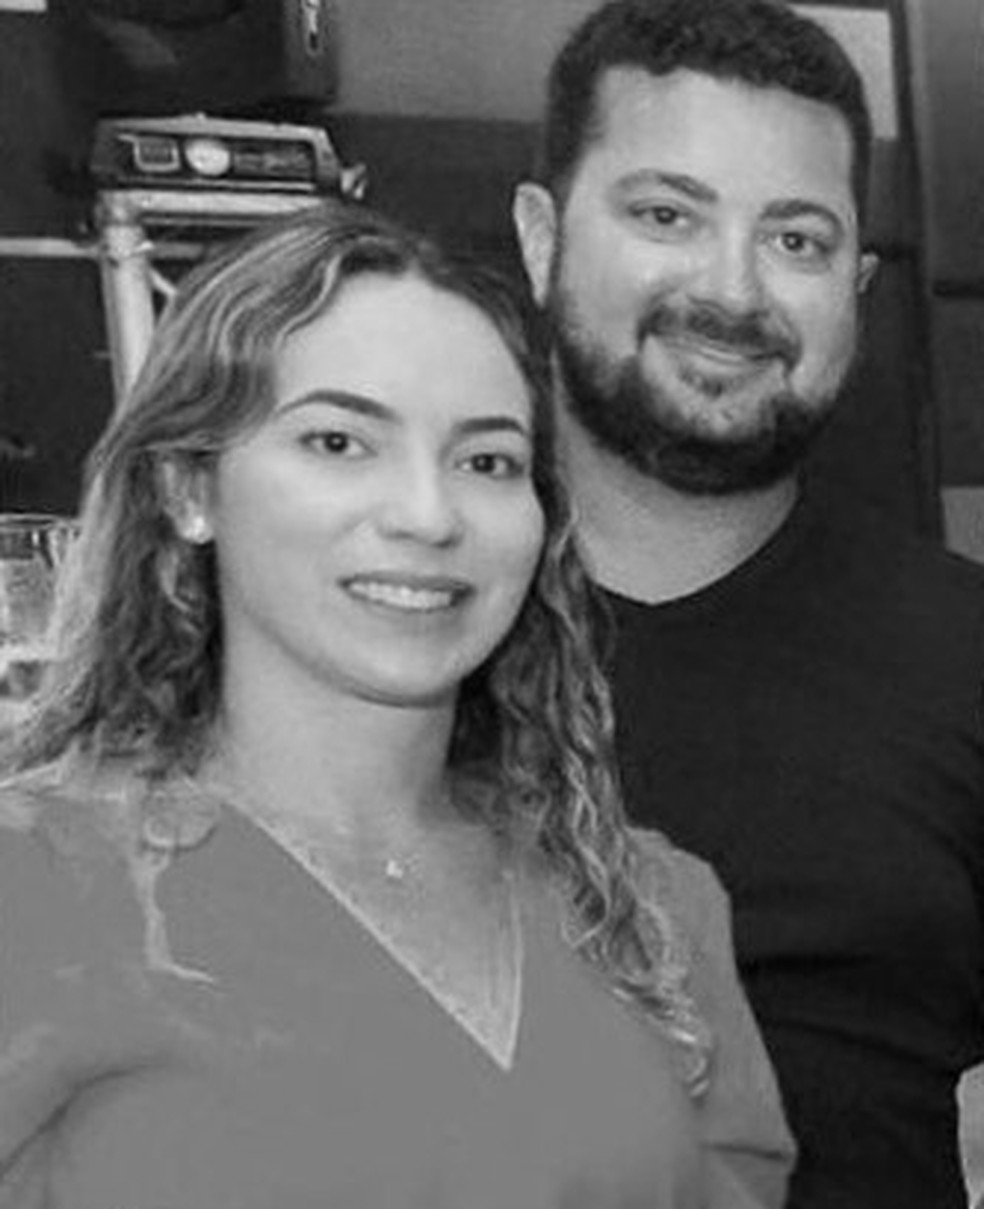 Fernanda Luísa Costa Amaral e o marido, André — Foto: Redes sociais